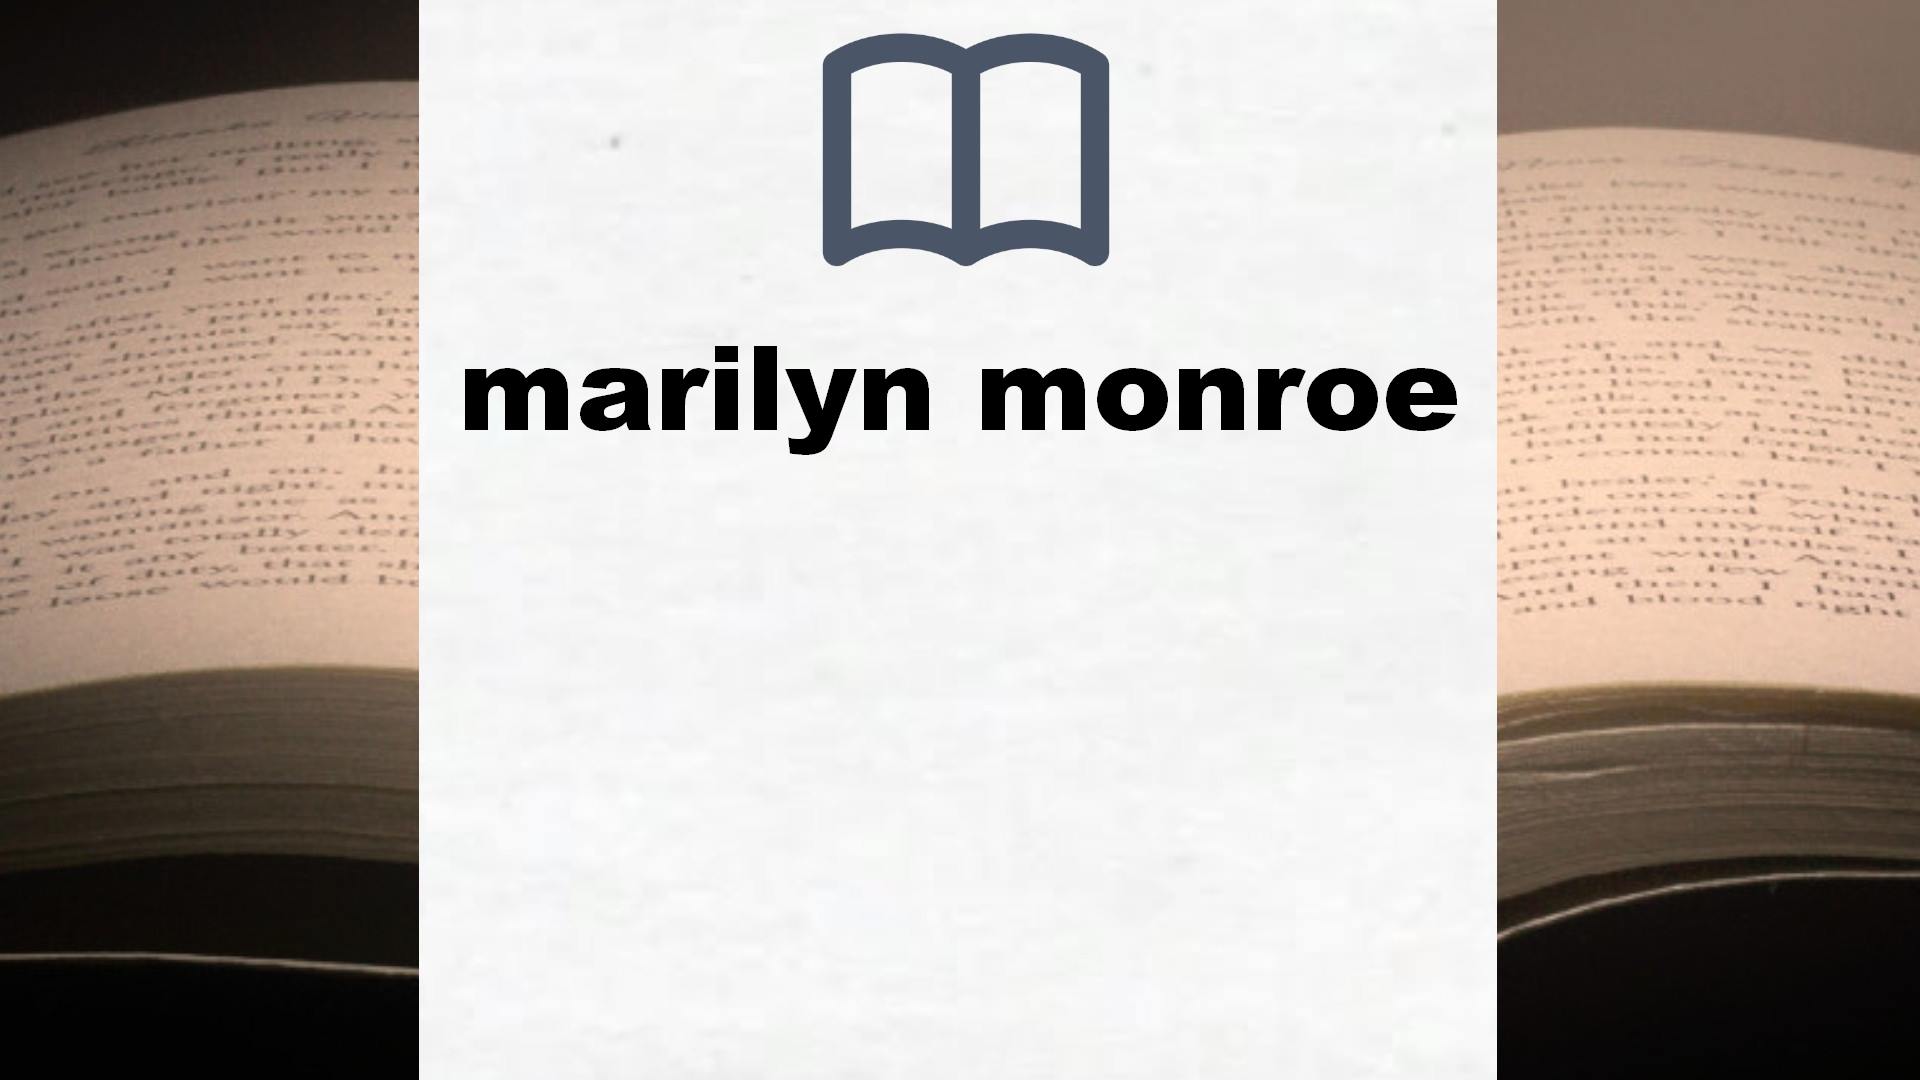 Libros sobre marilyn monroe